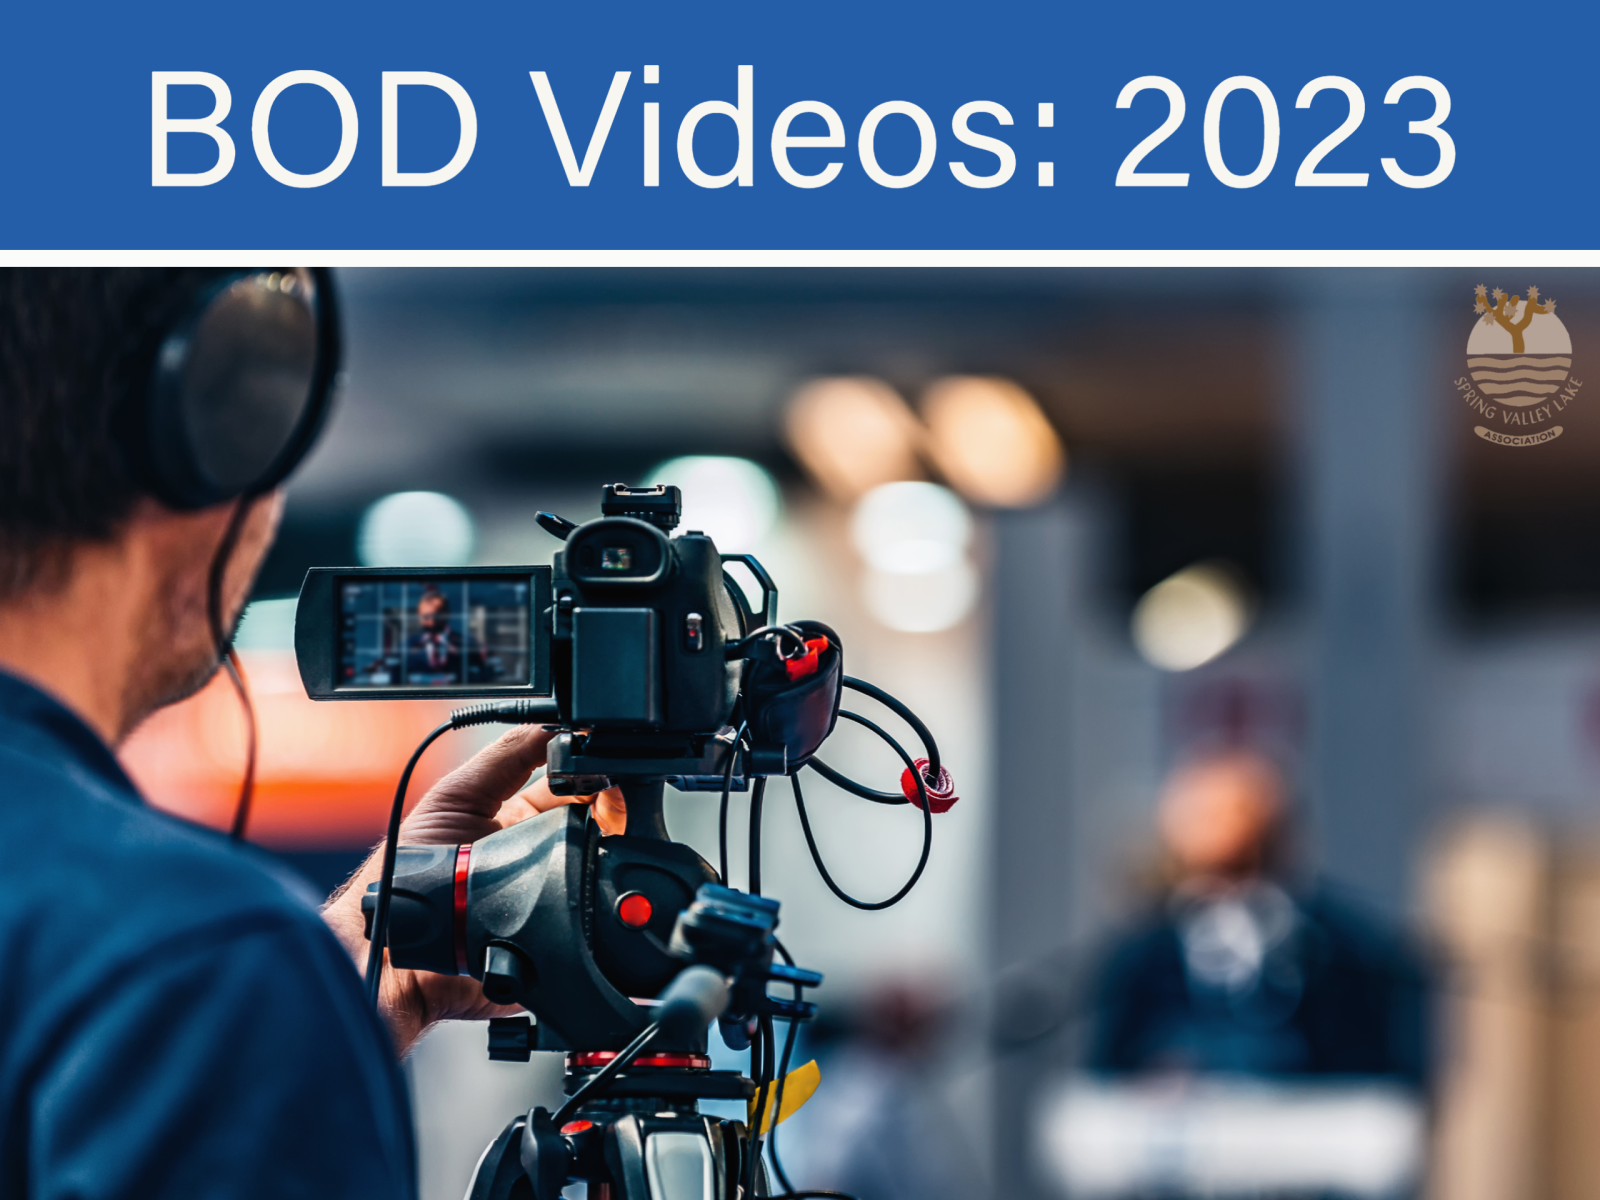 BOD Videos: 2023 